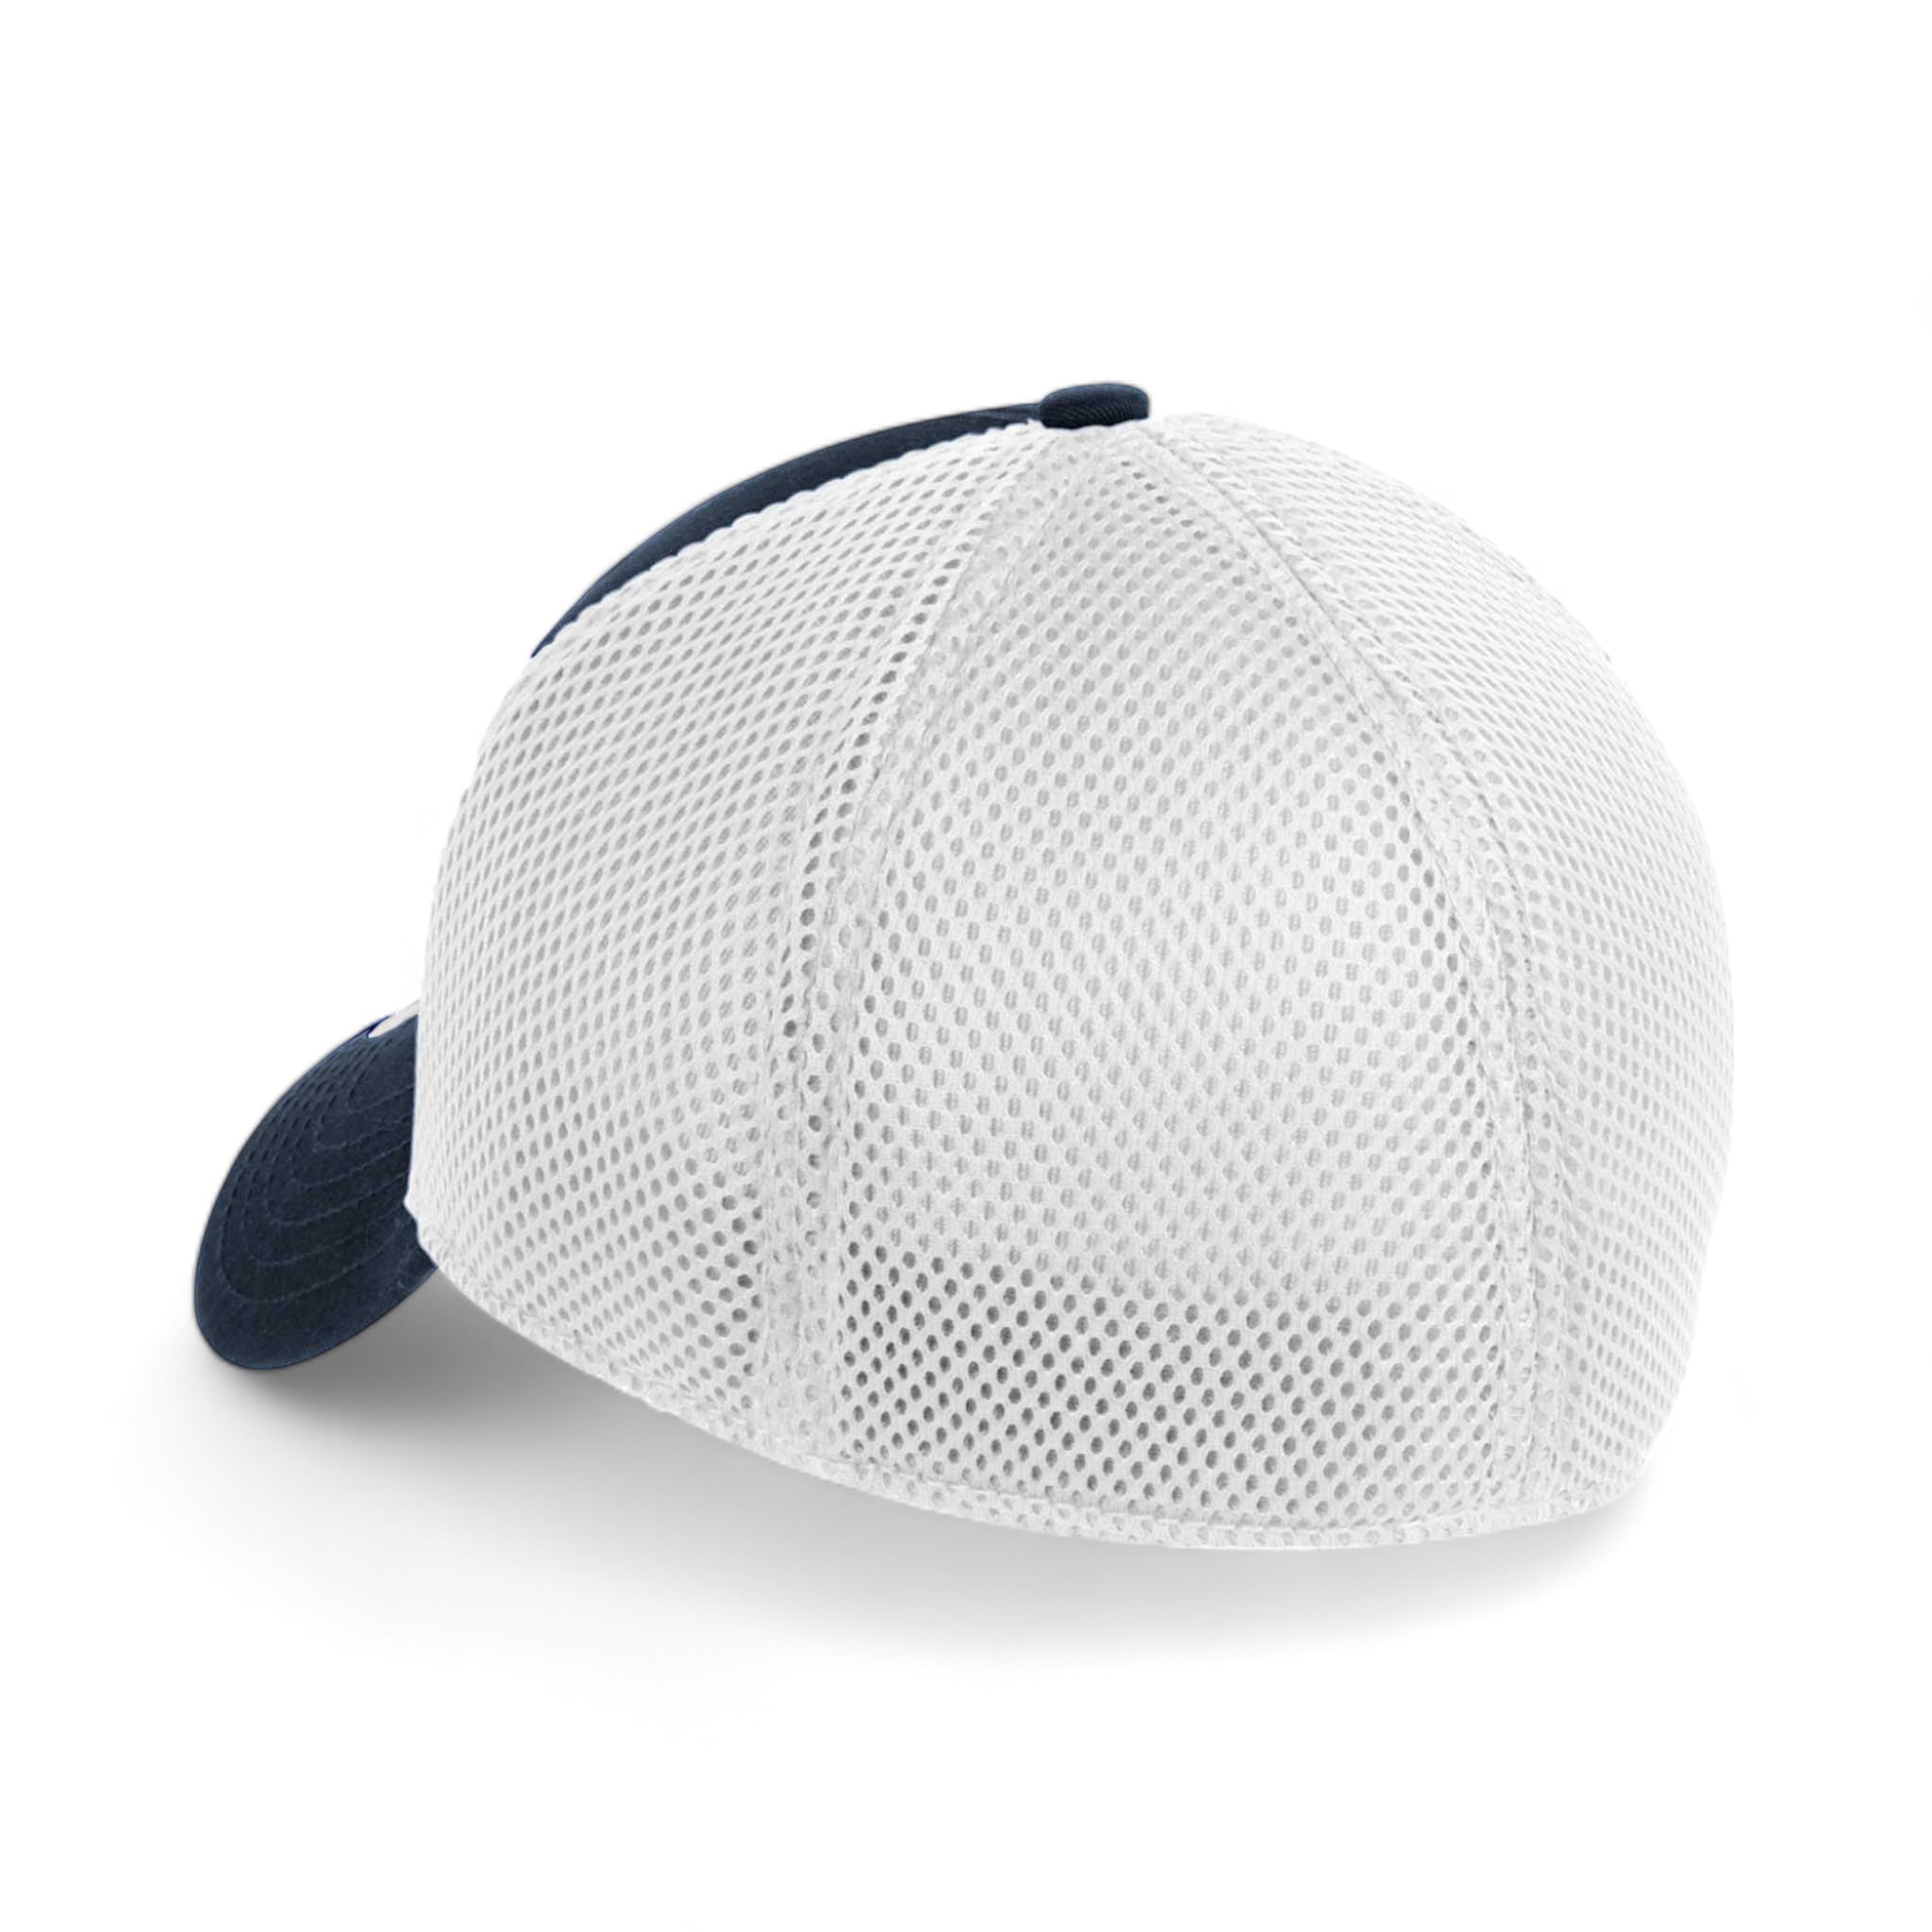 Back view of New Era NE1020 custom hat in deep navy and white